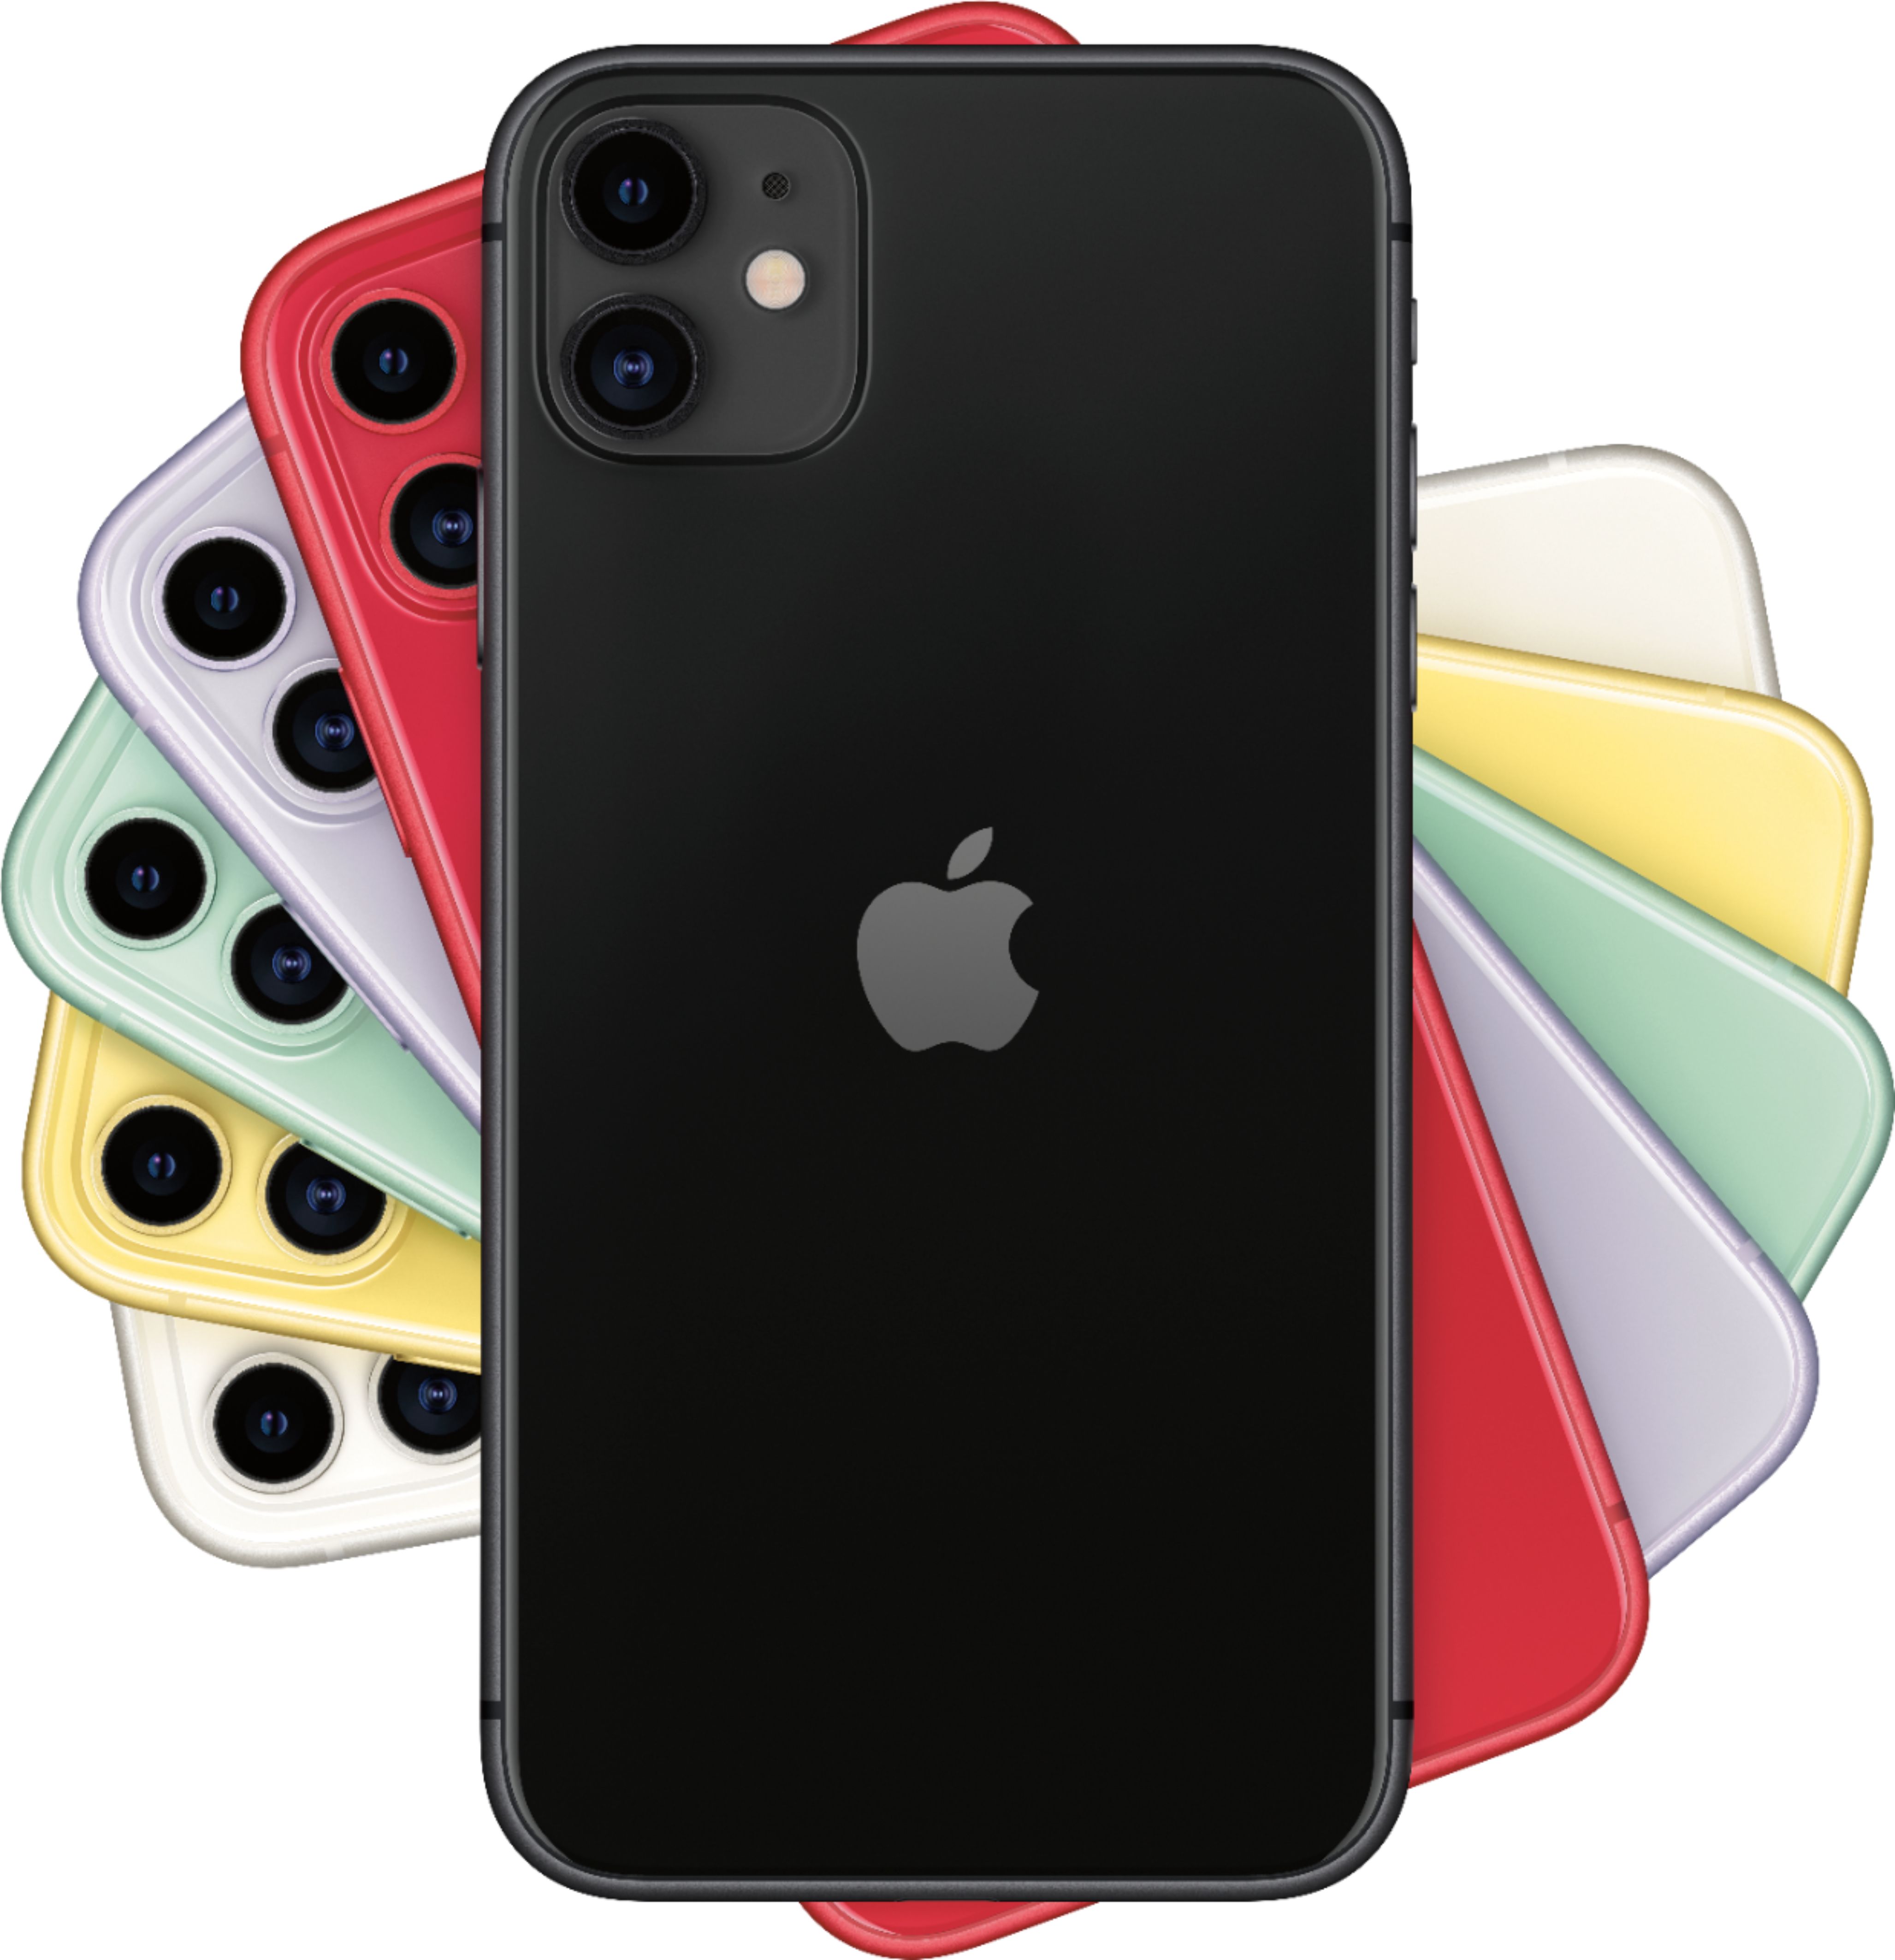 Apple iPhone 11 64GB Black (Verizon) MHCP3LL/A - Best Buy